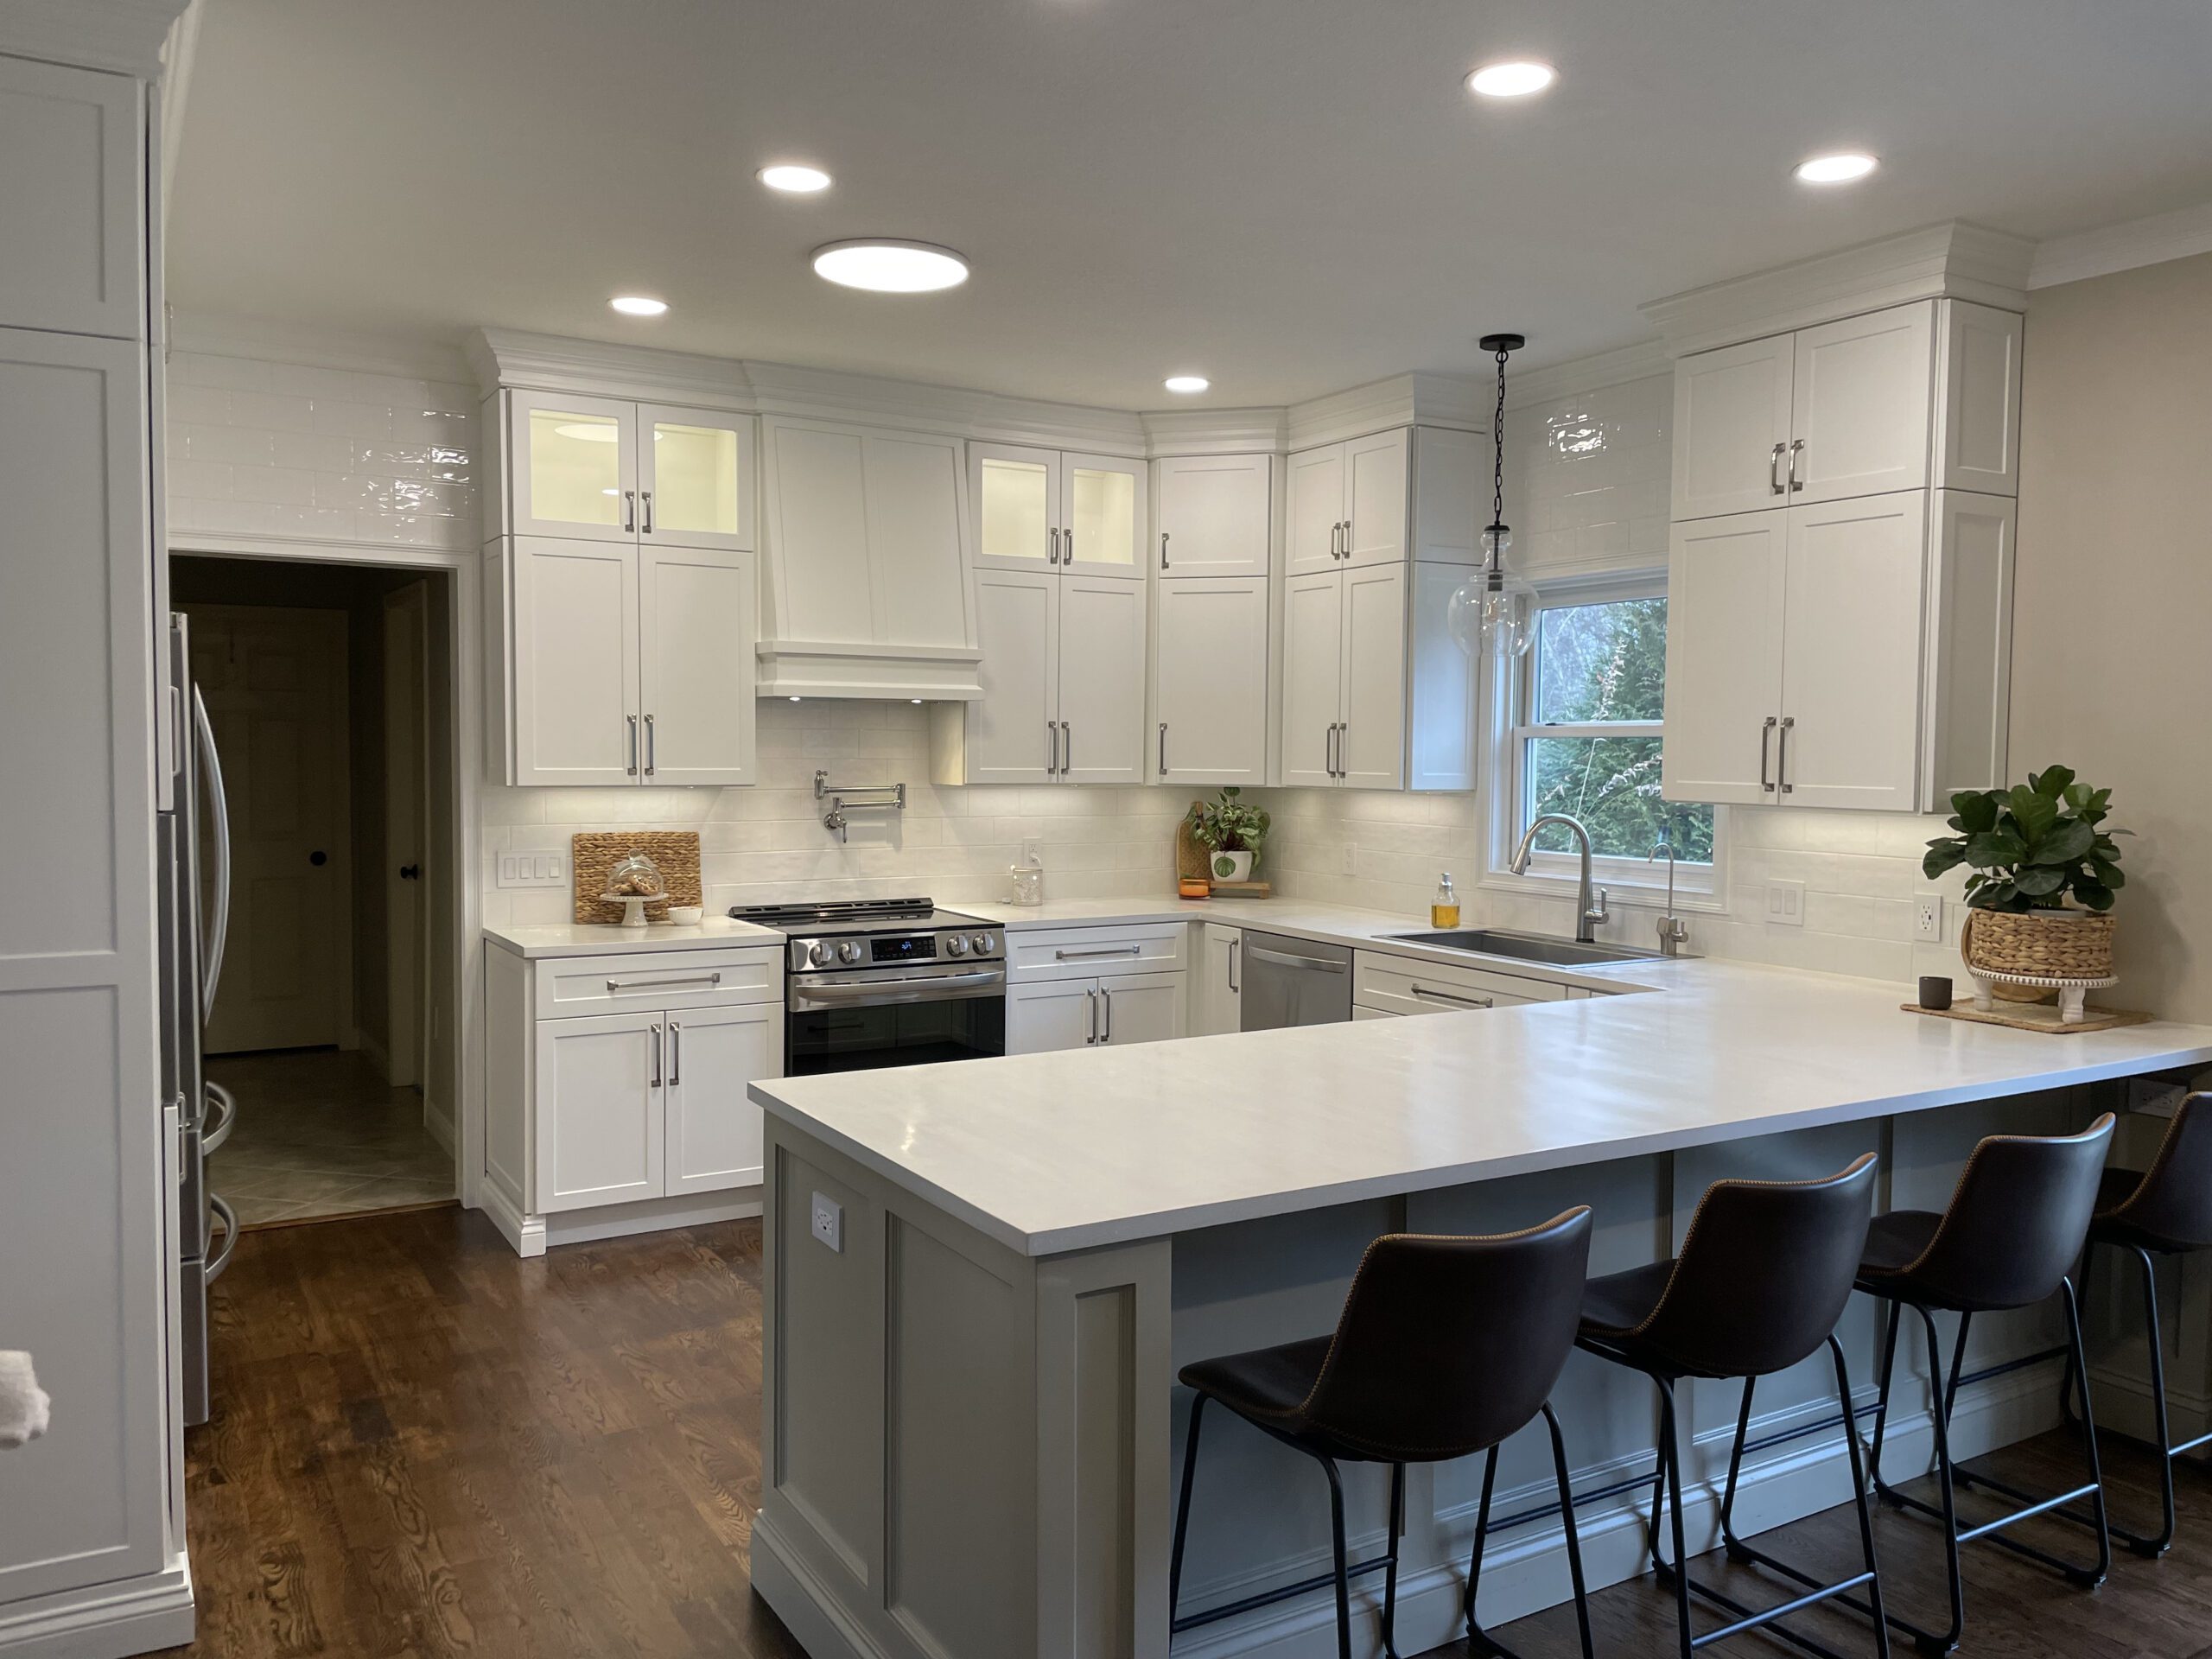 Clean, modern kitchen refresh with white cabinets.